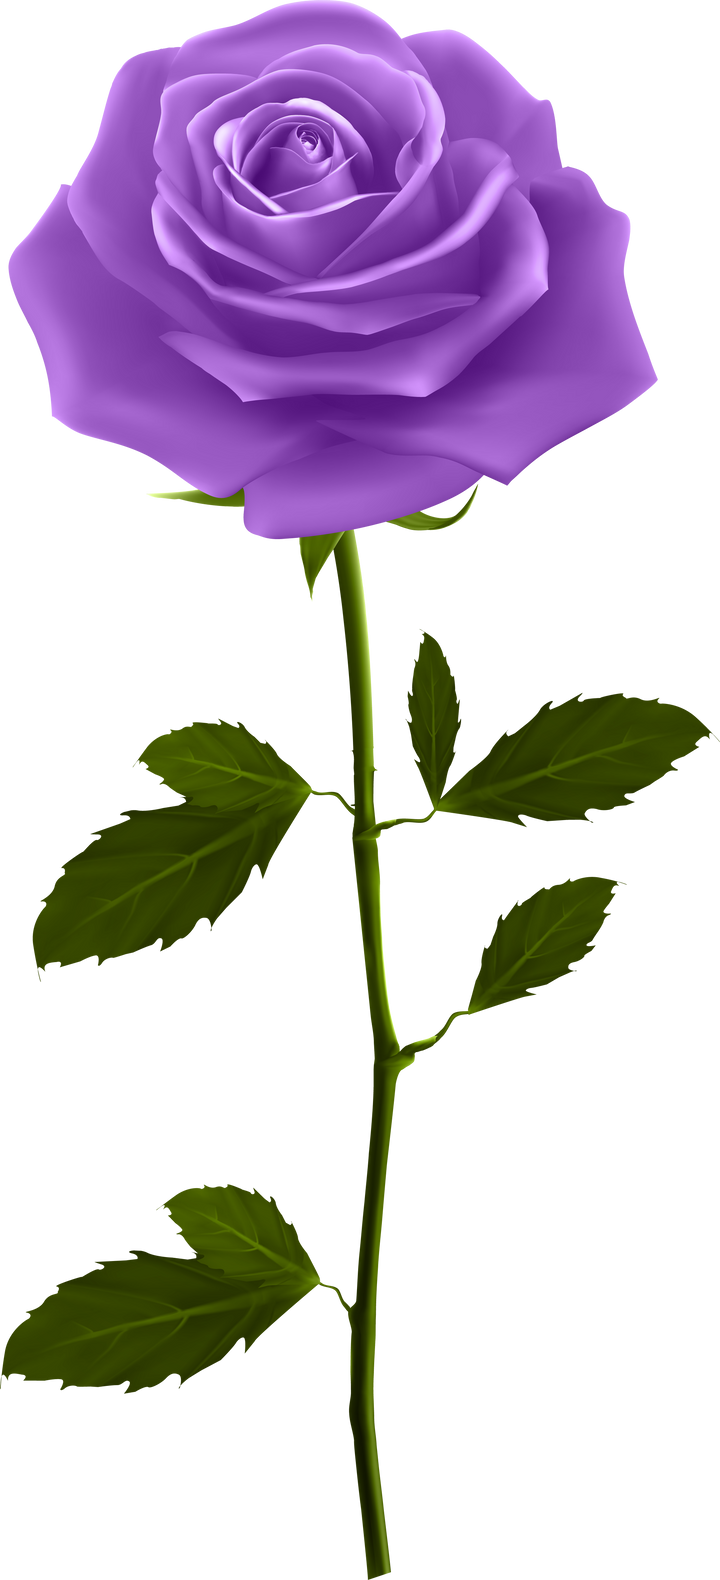 purple rose with stem illustration 3